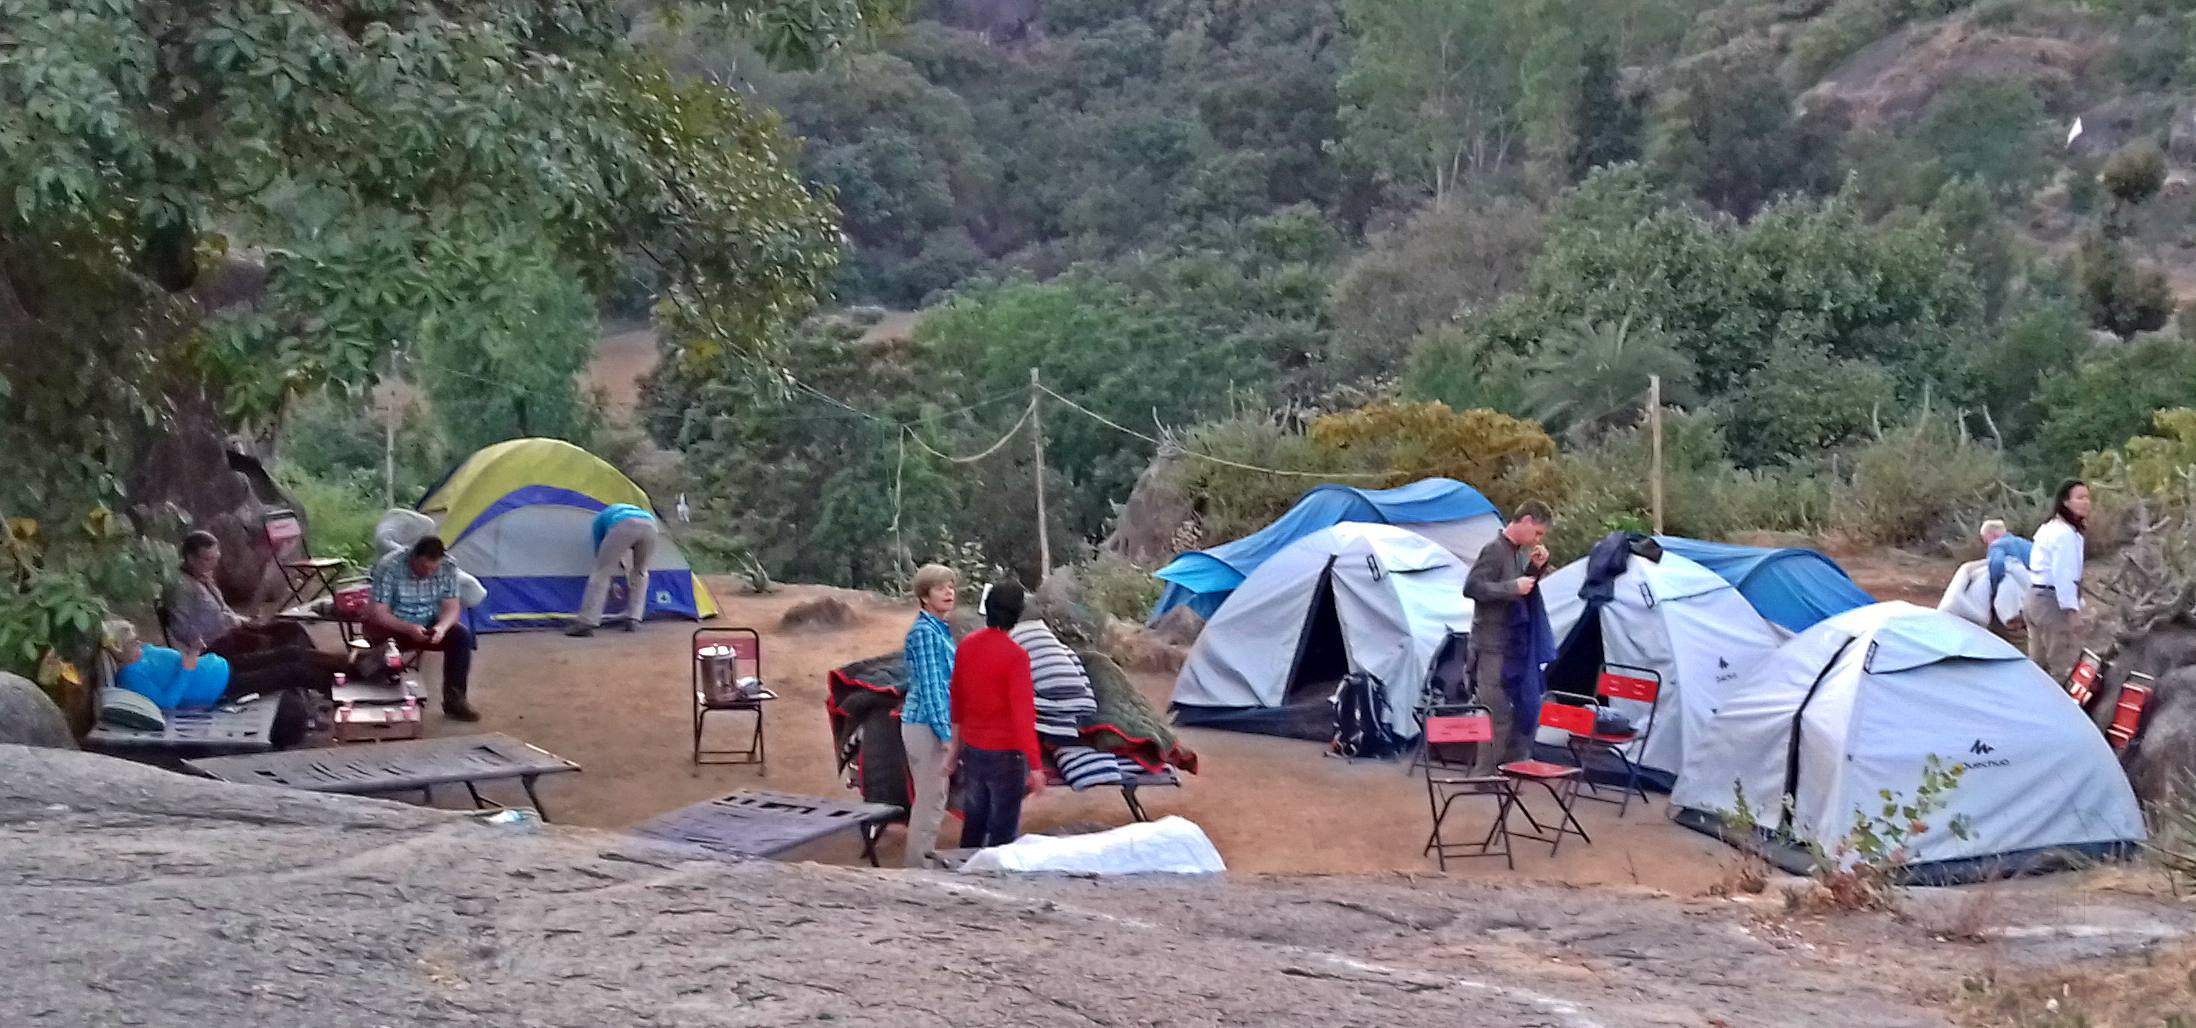  2. Camping & Hiking in Mount Abu